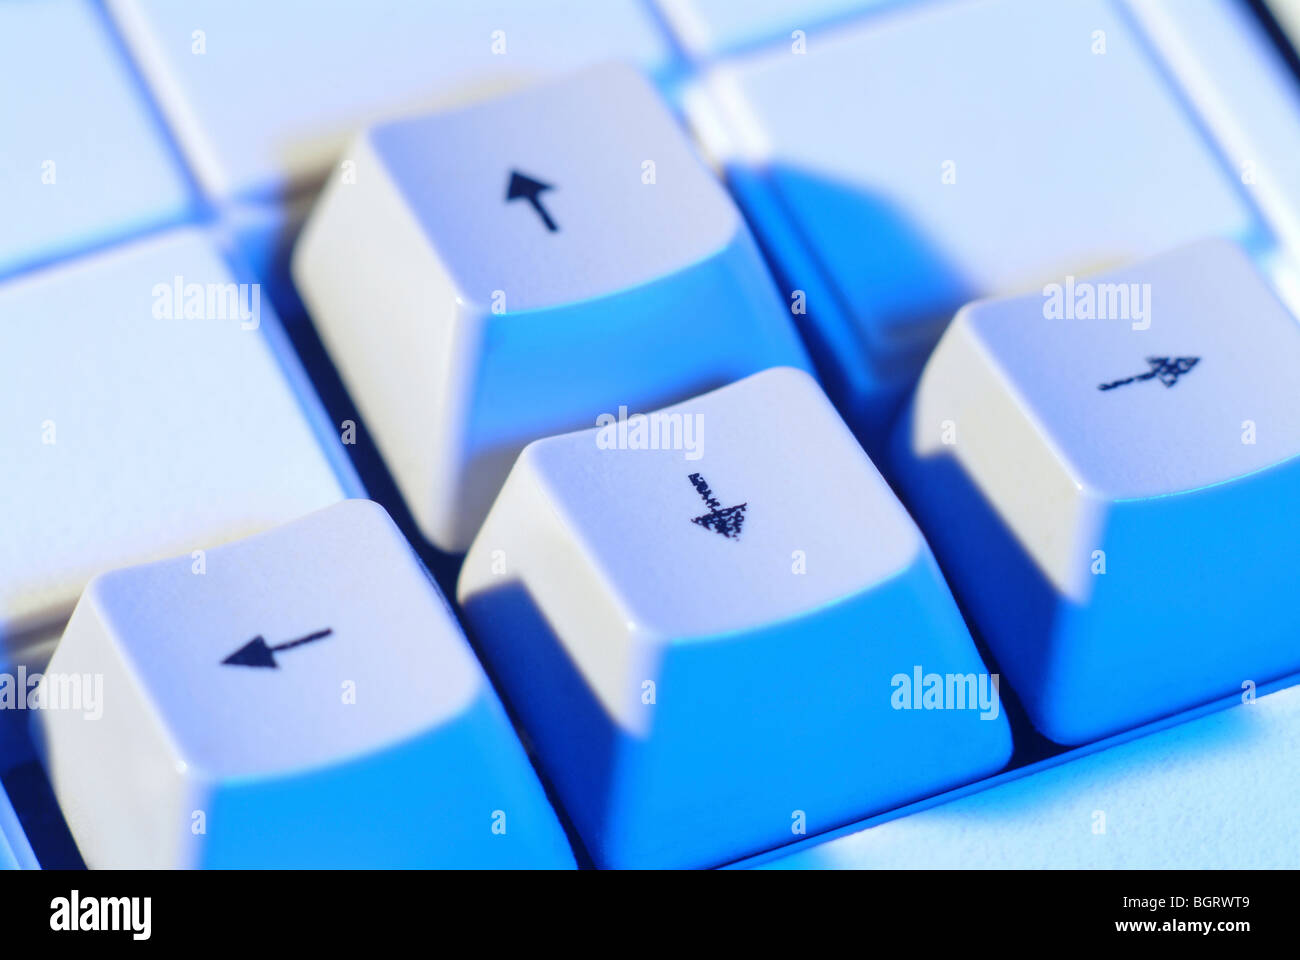 Arrow keys on a keyboard Stock Photo - Alamy